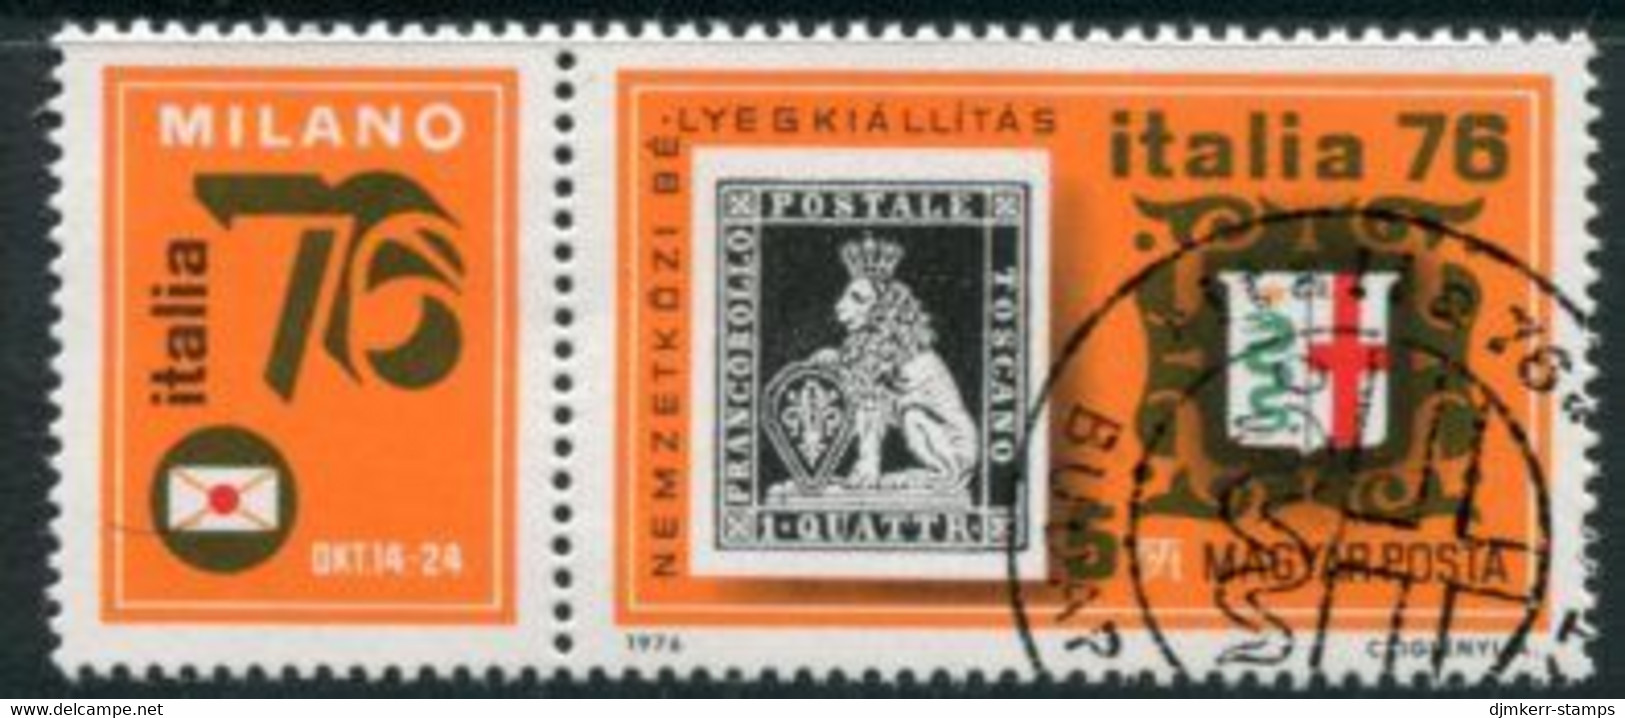 HUNGARY 1976 ITALIA Stamp Exhibition  Used.  Michel 3143 - Usado